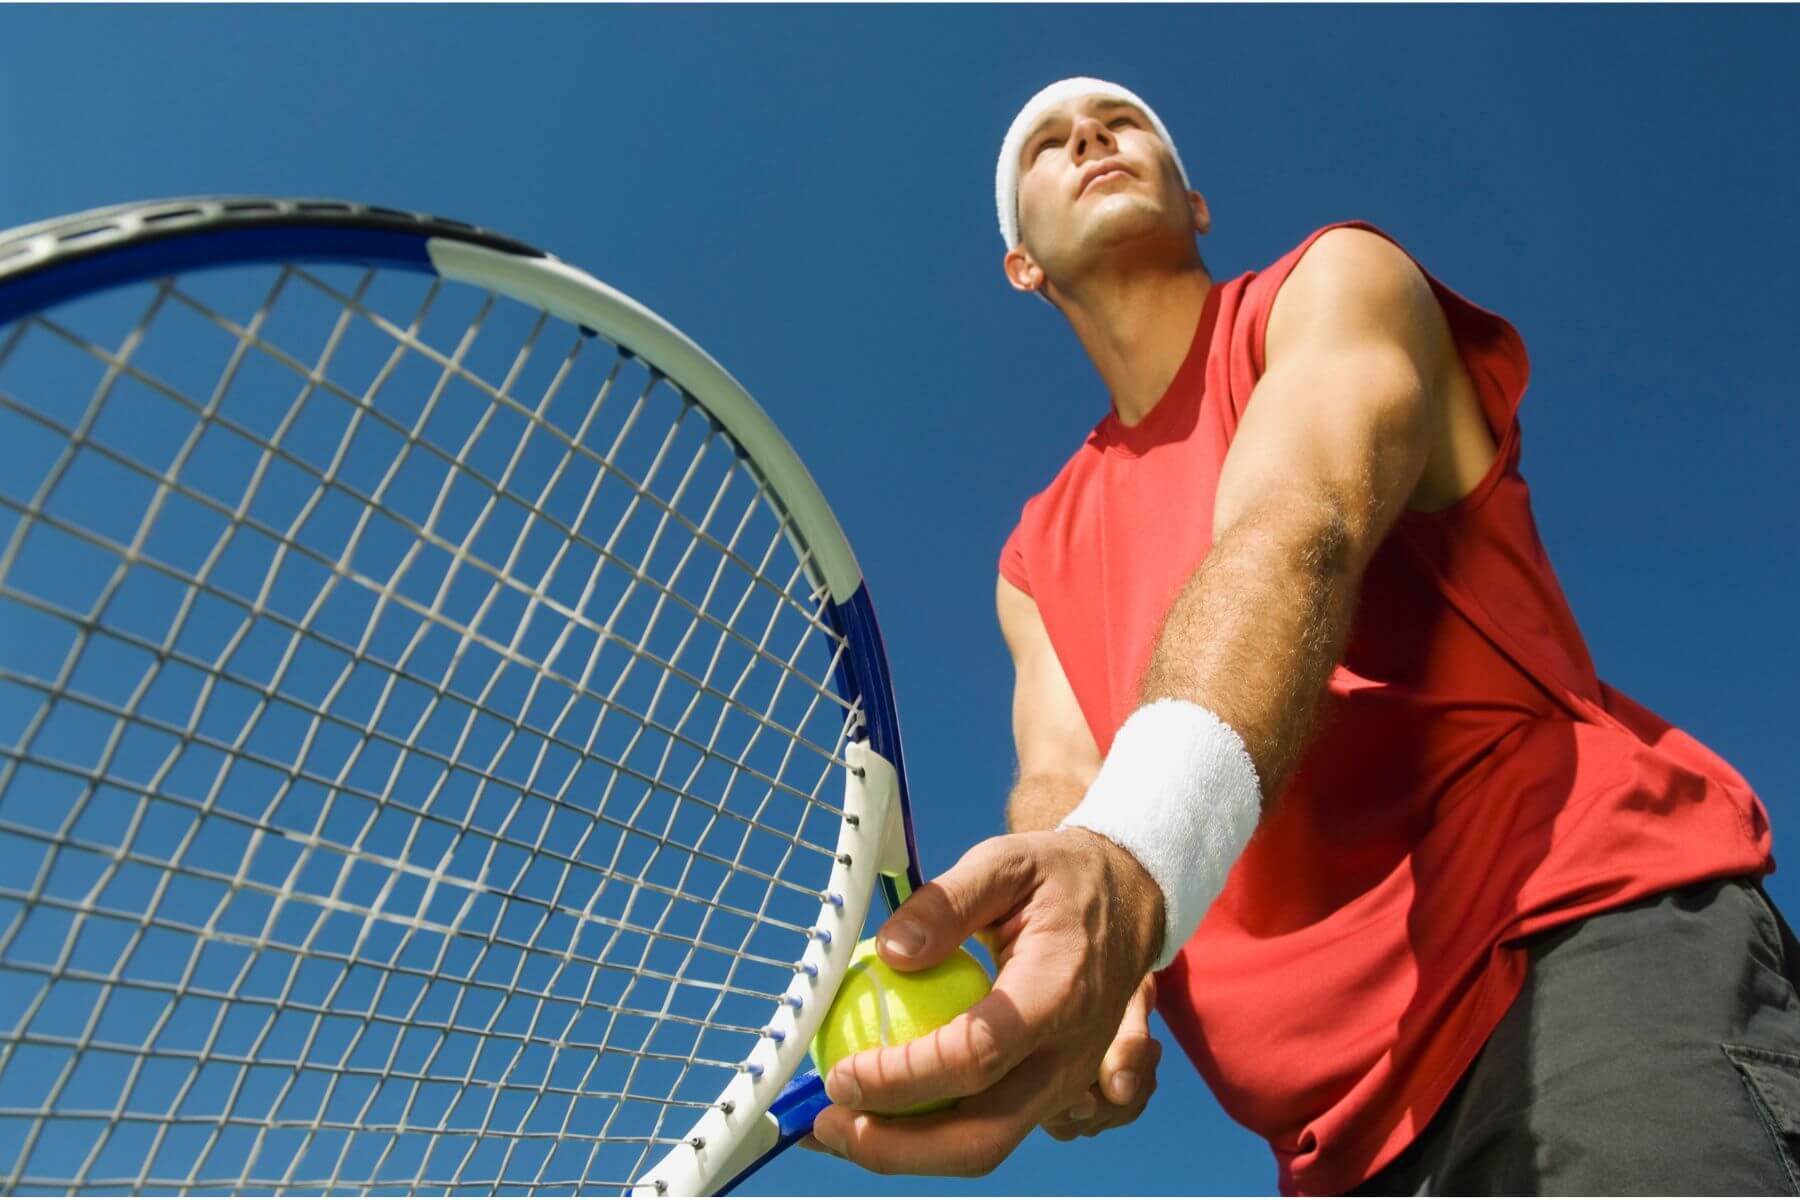 Man attempting tennis serve